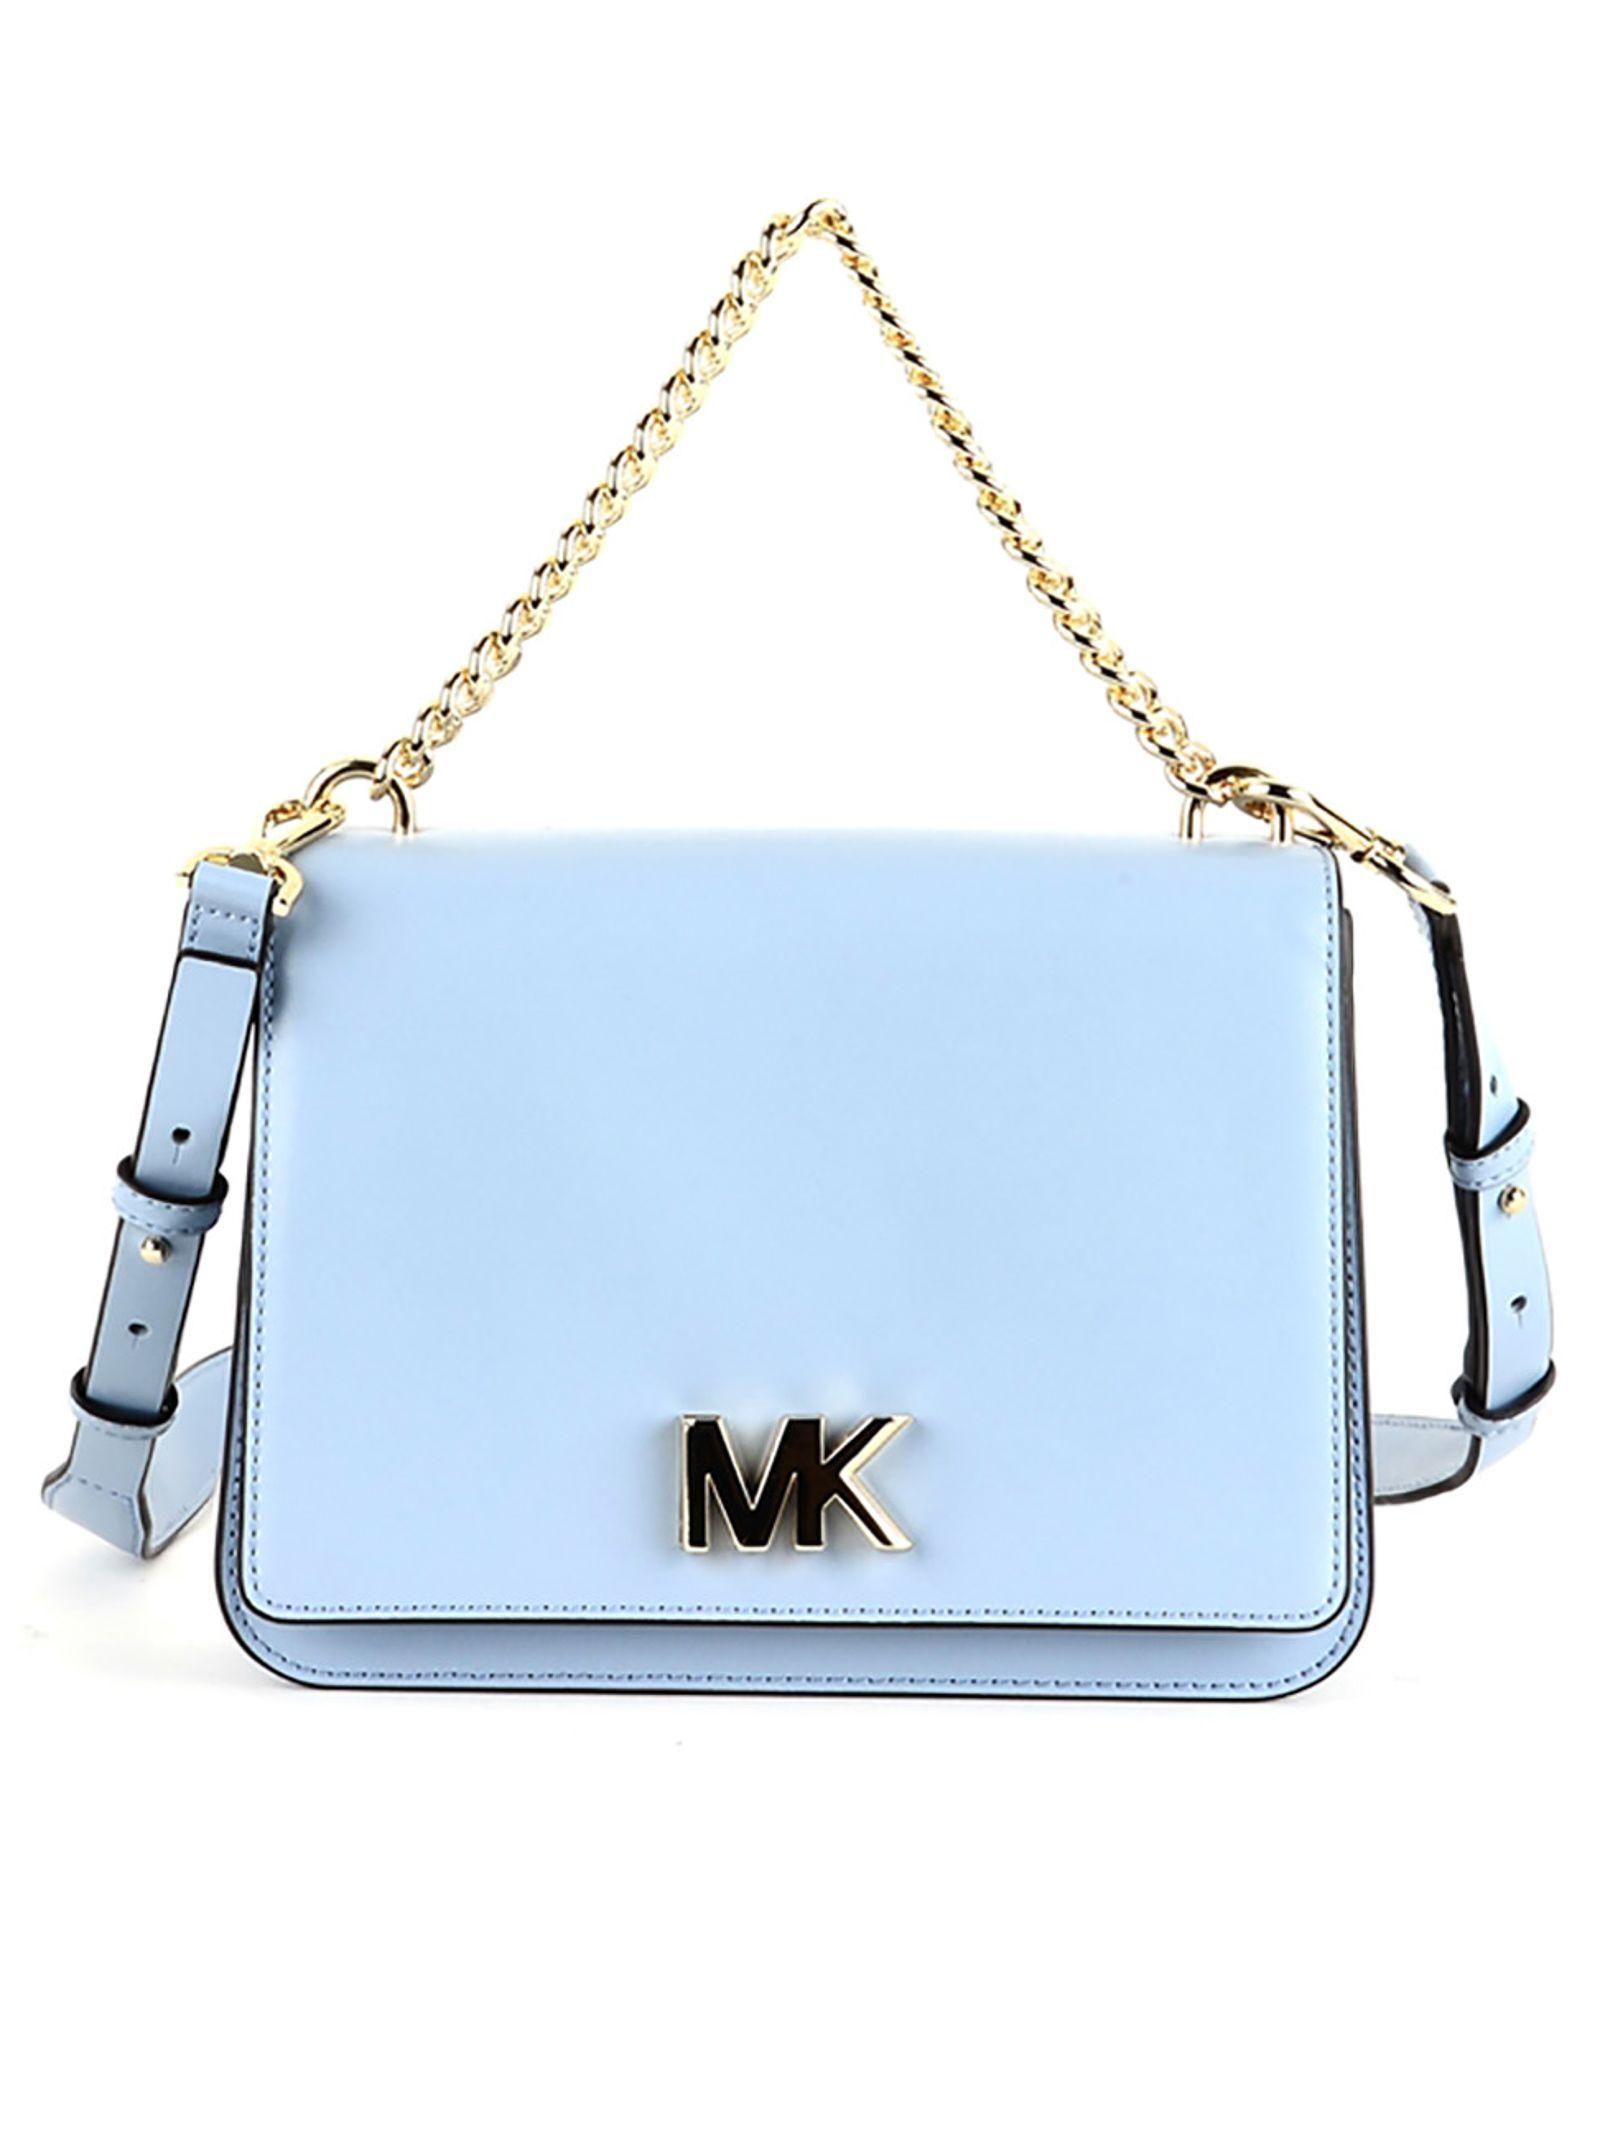 michael kors baby blue purse